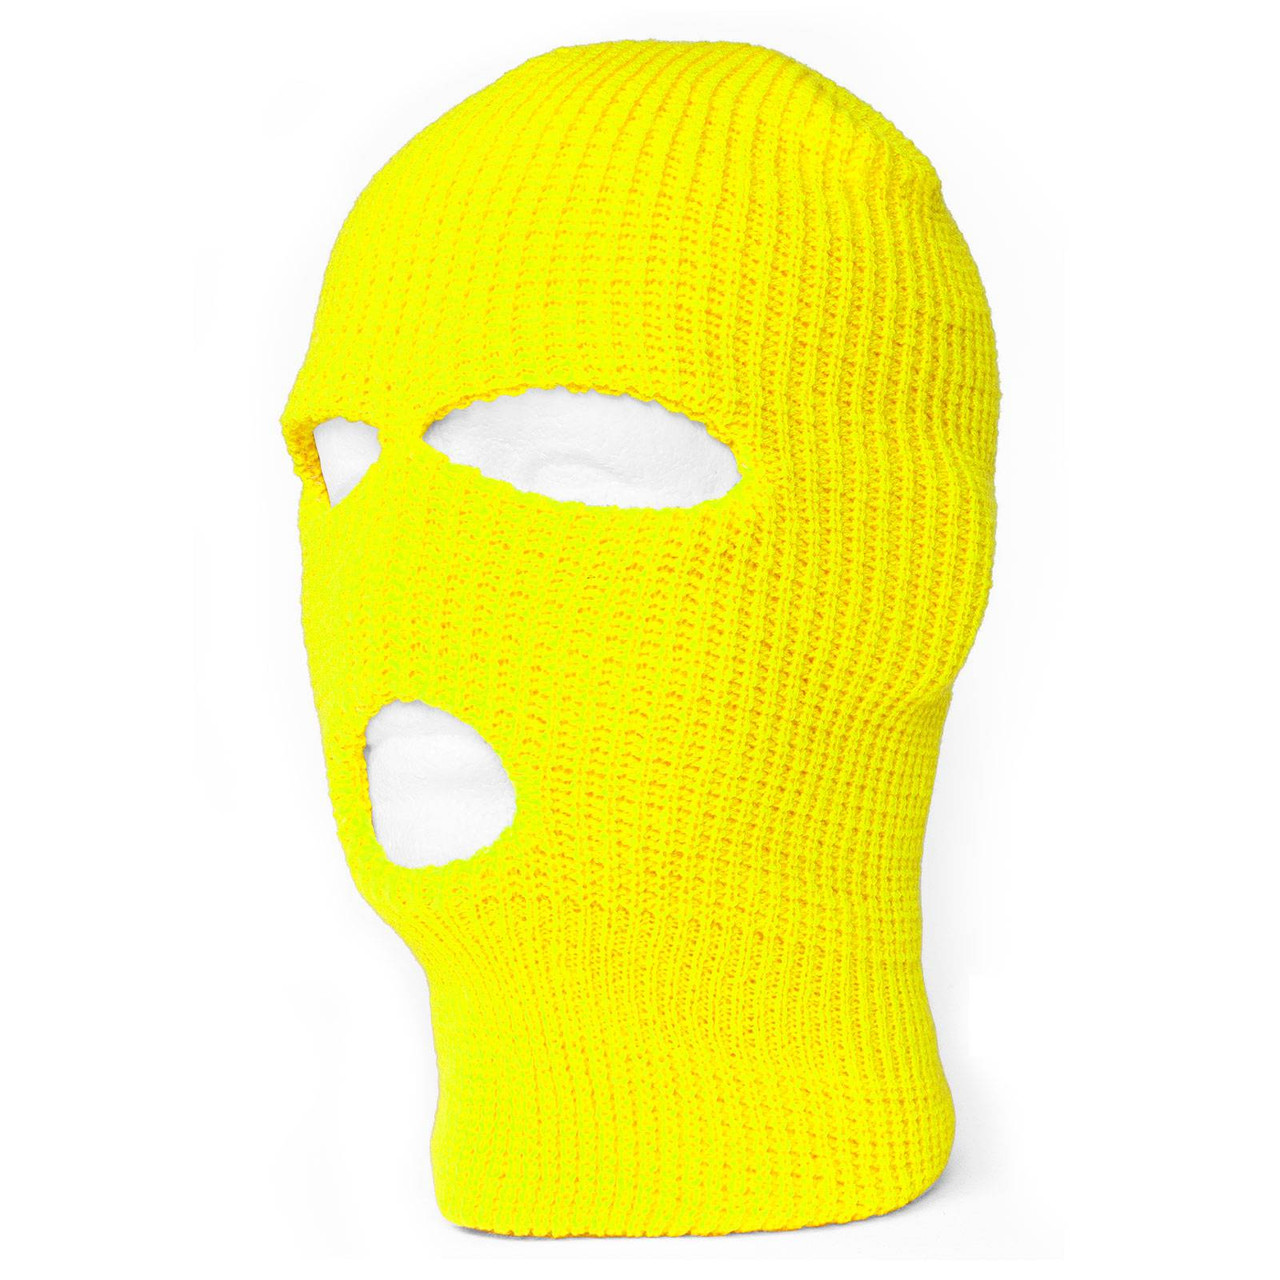 Top Headwear Three Hole Neon Colored Ski Mask - Yellow - Gravity Trading